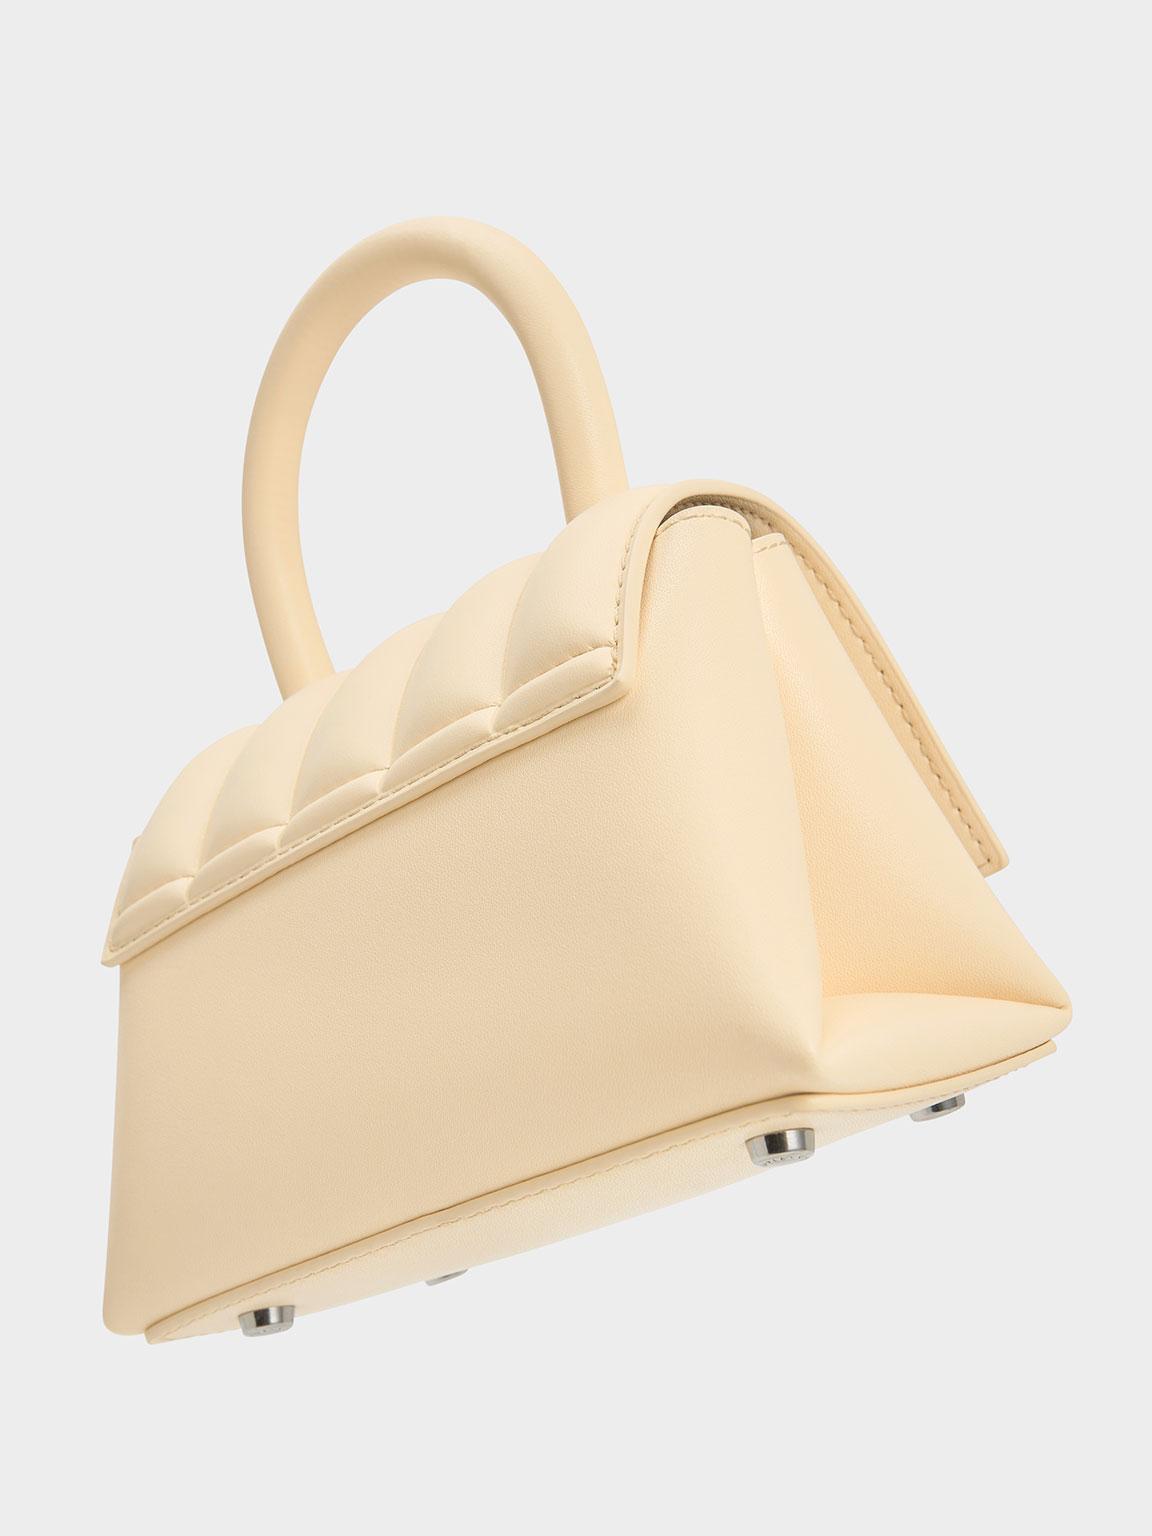 Cream Huxley Metallic Push-Lock Top Handle Bag, CHARLES & KEITH